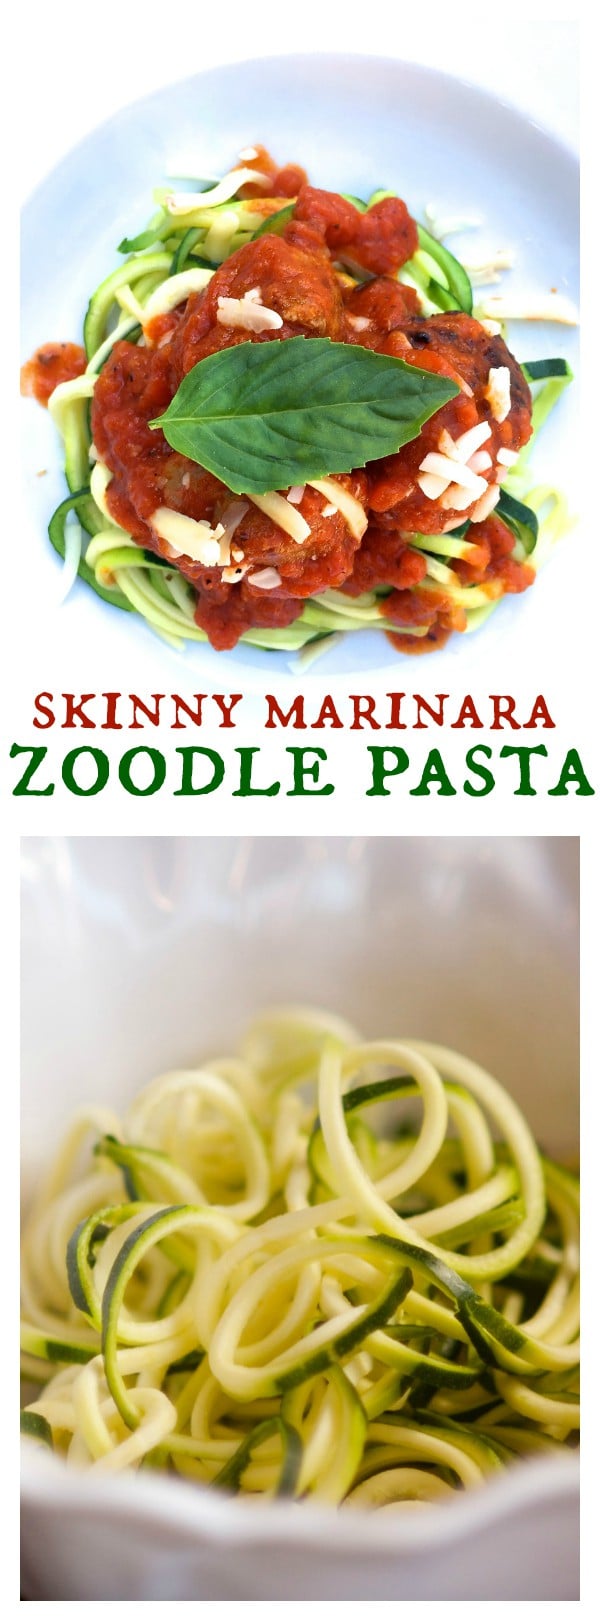 Skinny Marinara Zoodle Pasta